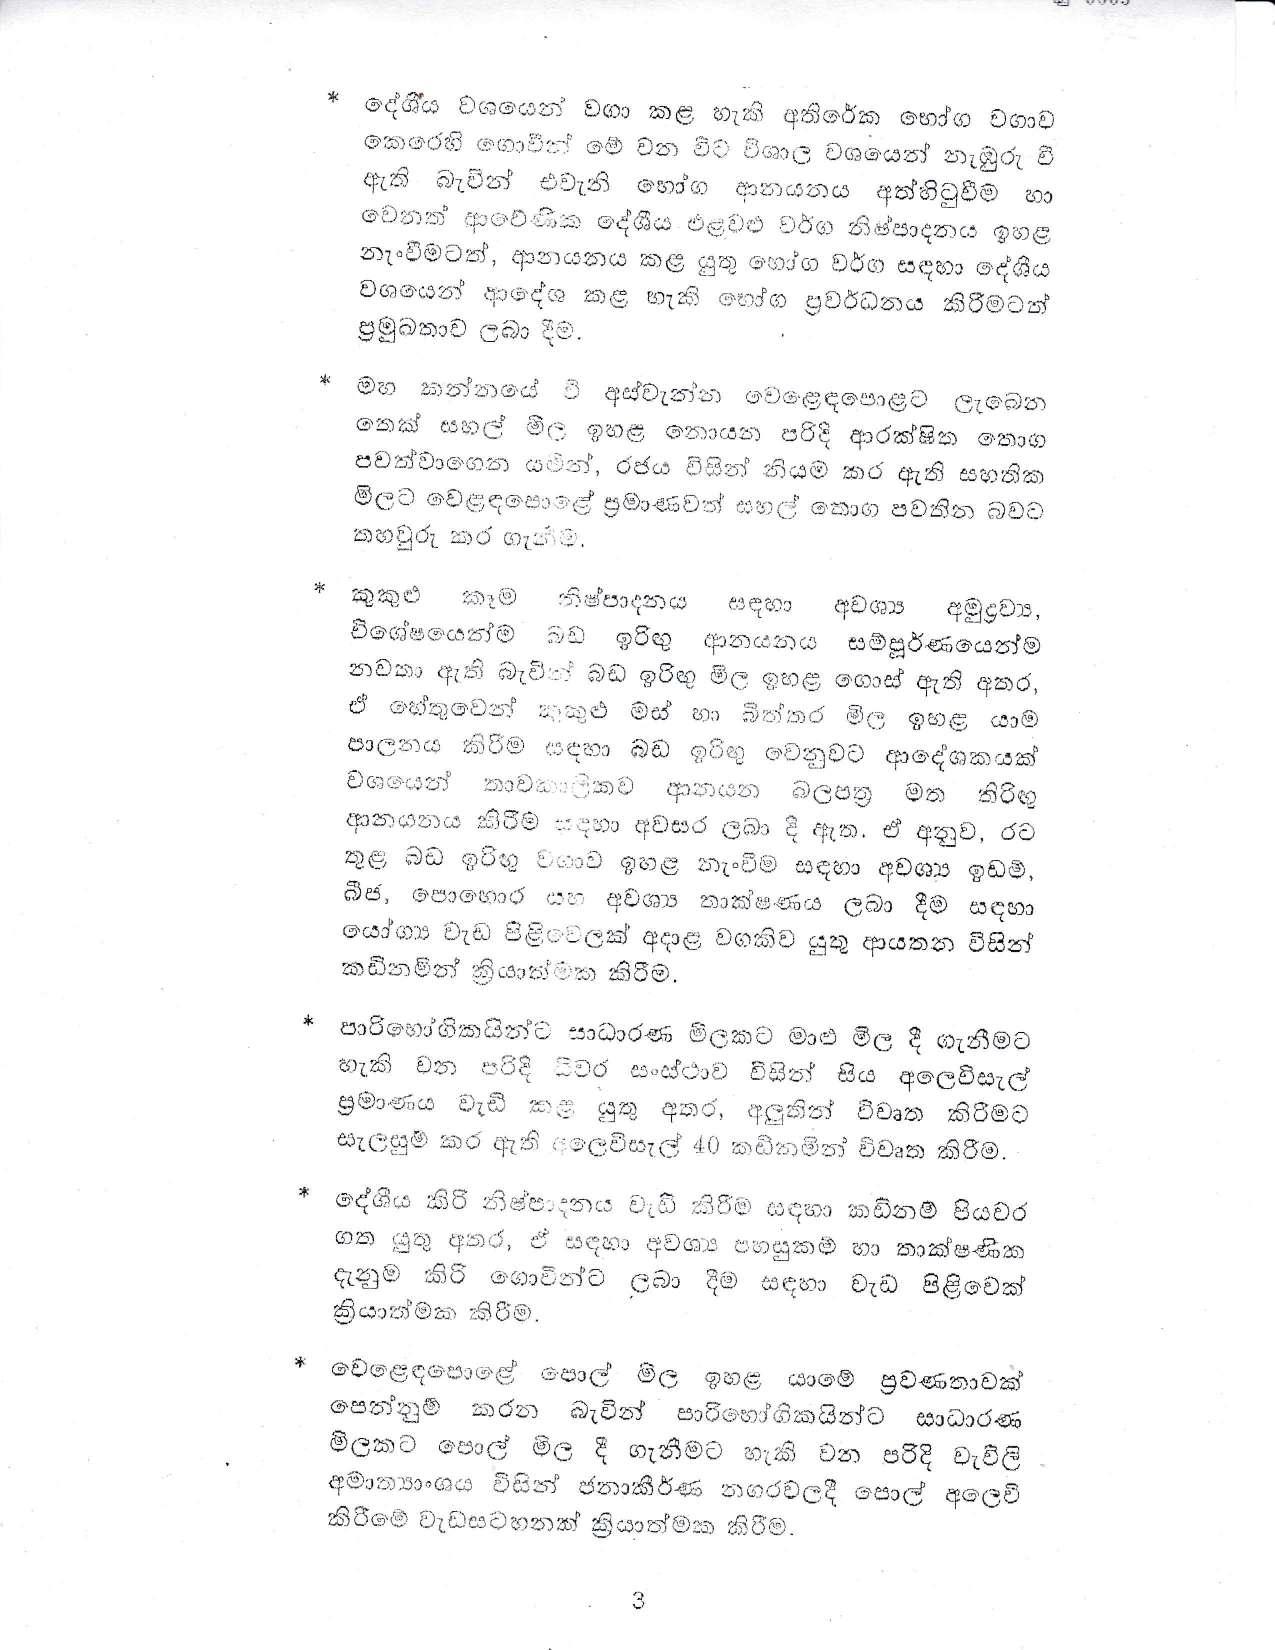 Cabinet Desicion on 21.09.2020 Sinhala page 003